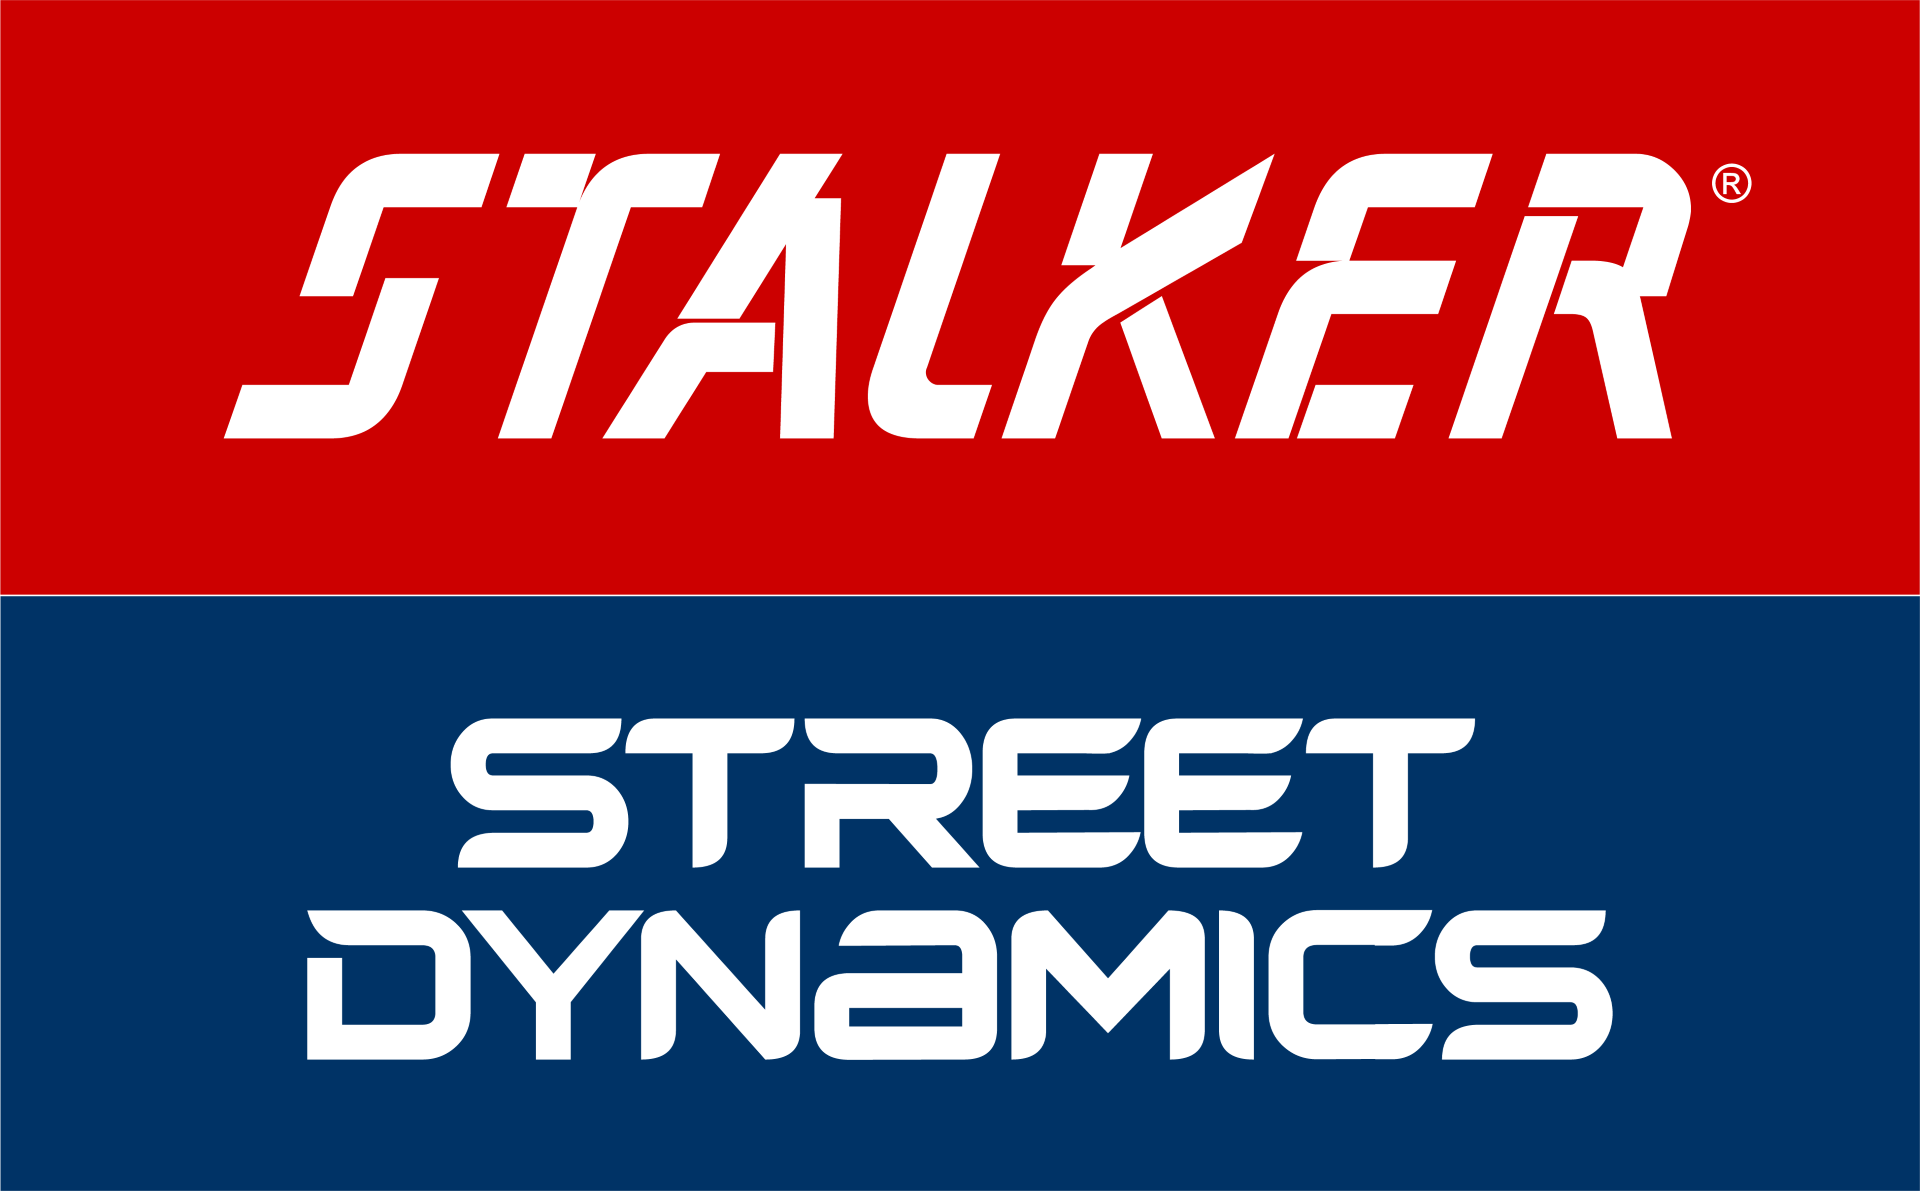 Booth # 56-2024 Stalker Street Dynamics